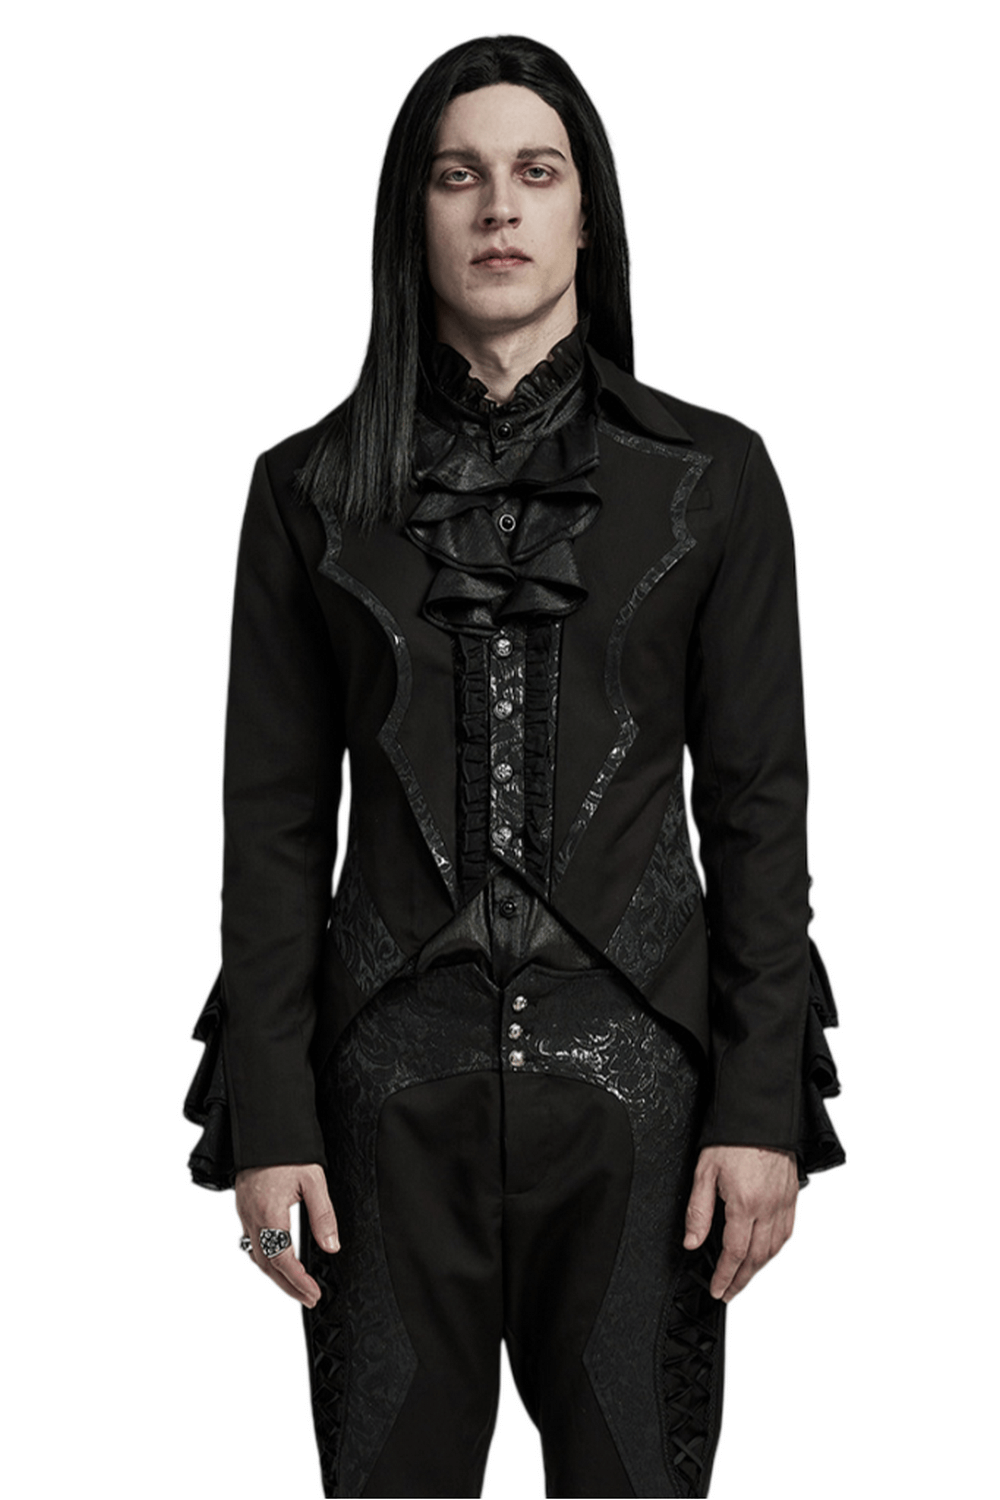 Men's Victorian Style Ruffle Cuff Gothic Jacket